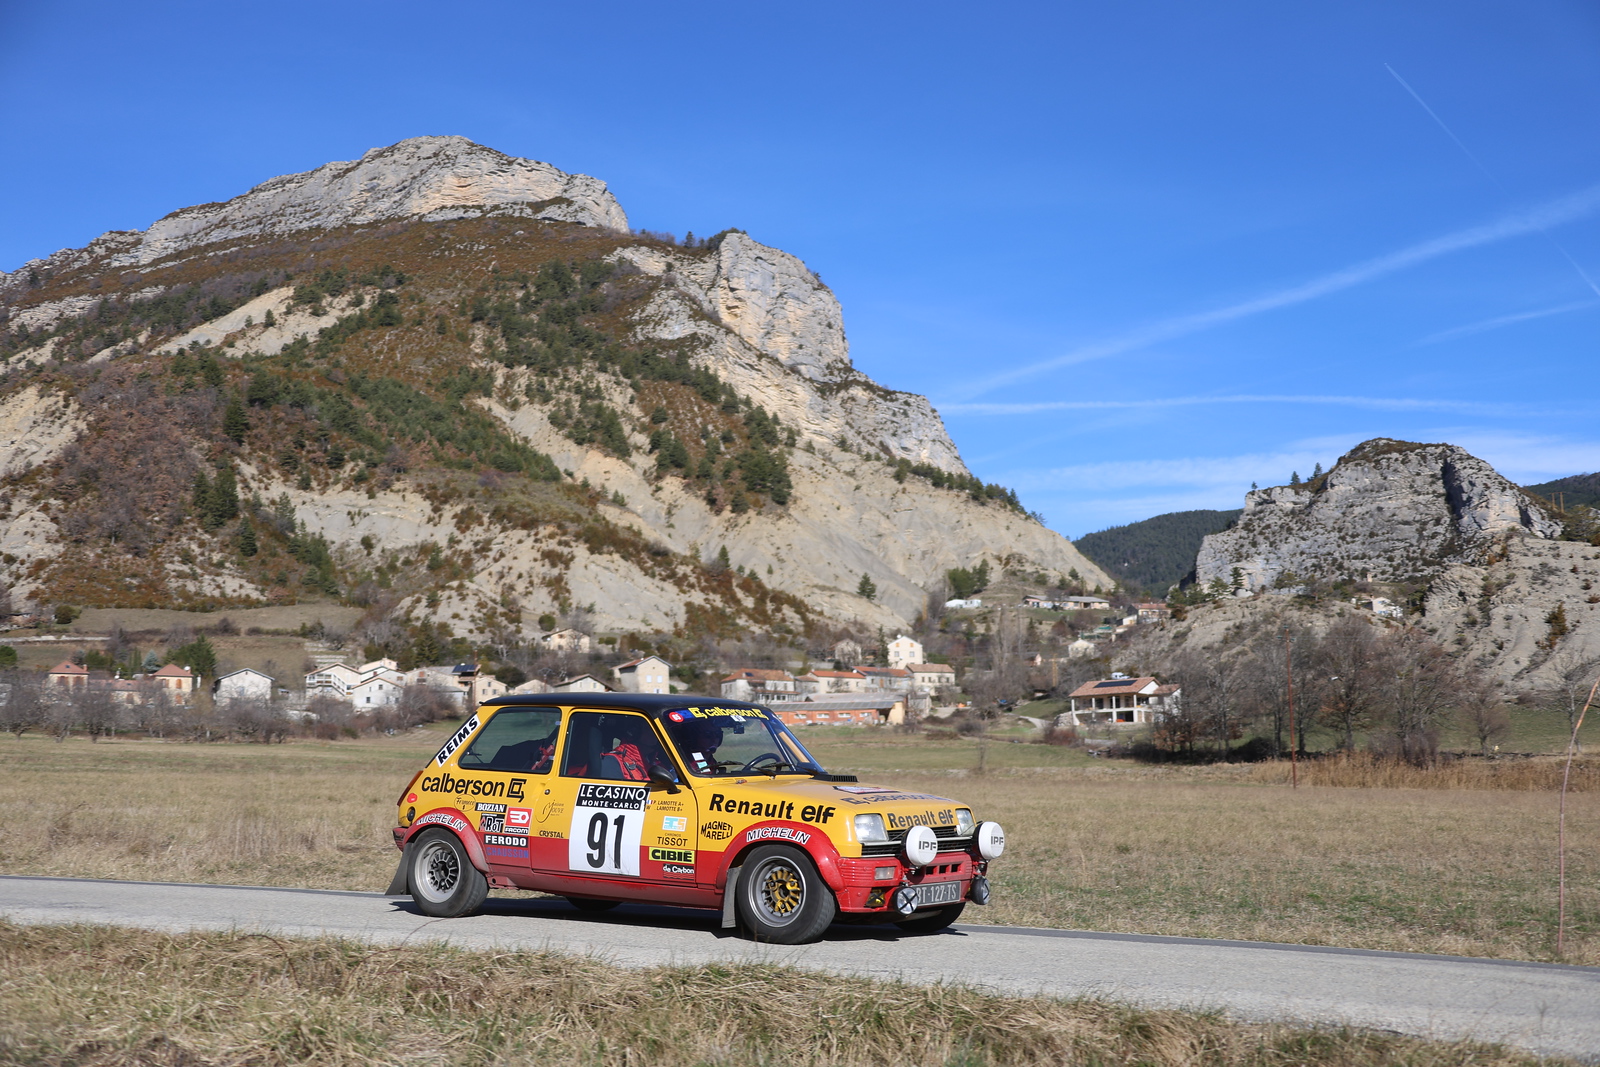 i-fwMsKMC-X3 SemanalClásico - Revista online de coches clásicos, de colección y sport - rally monte carlo historico